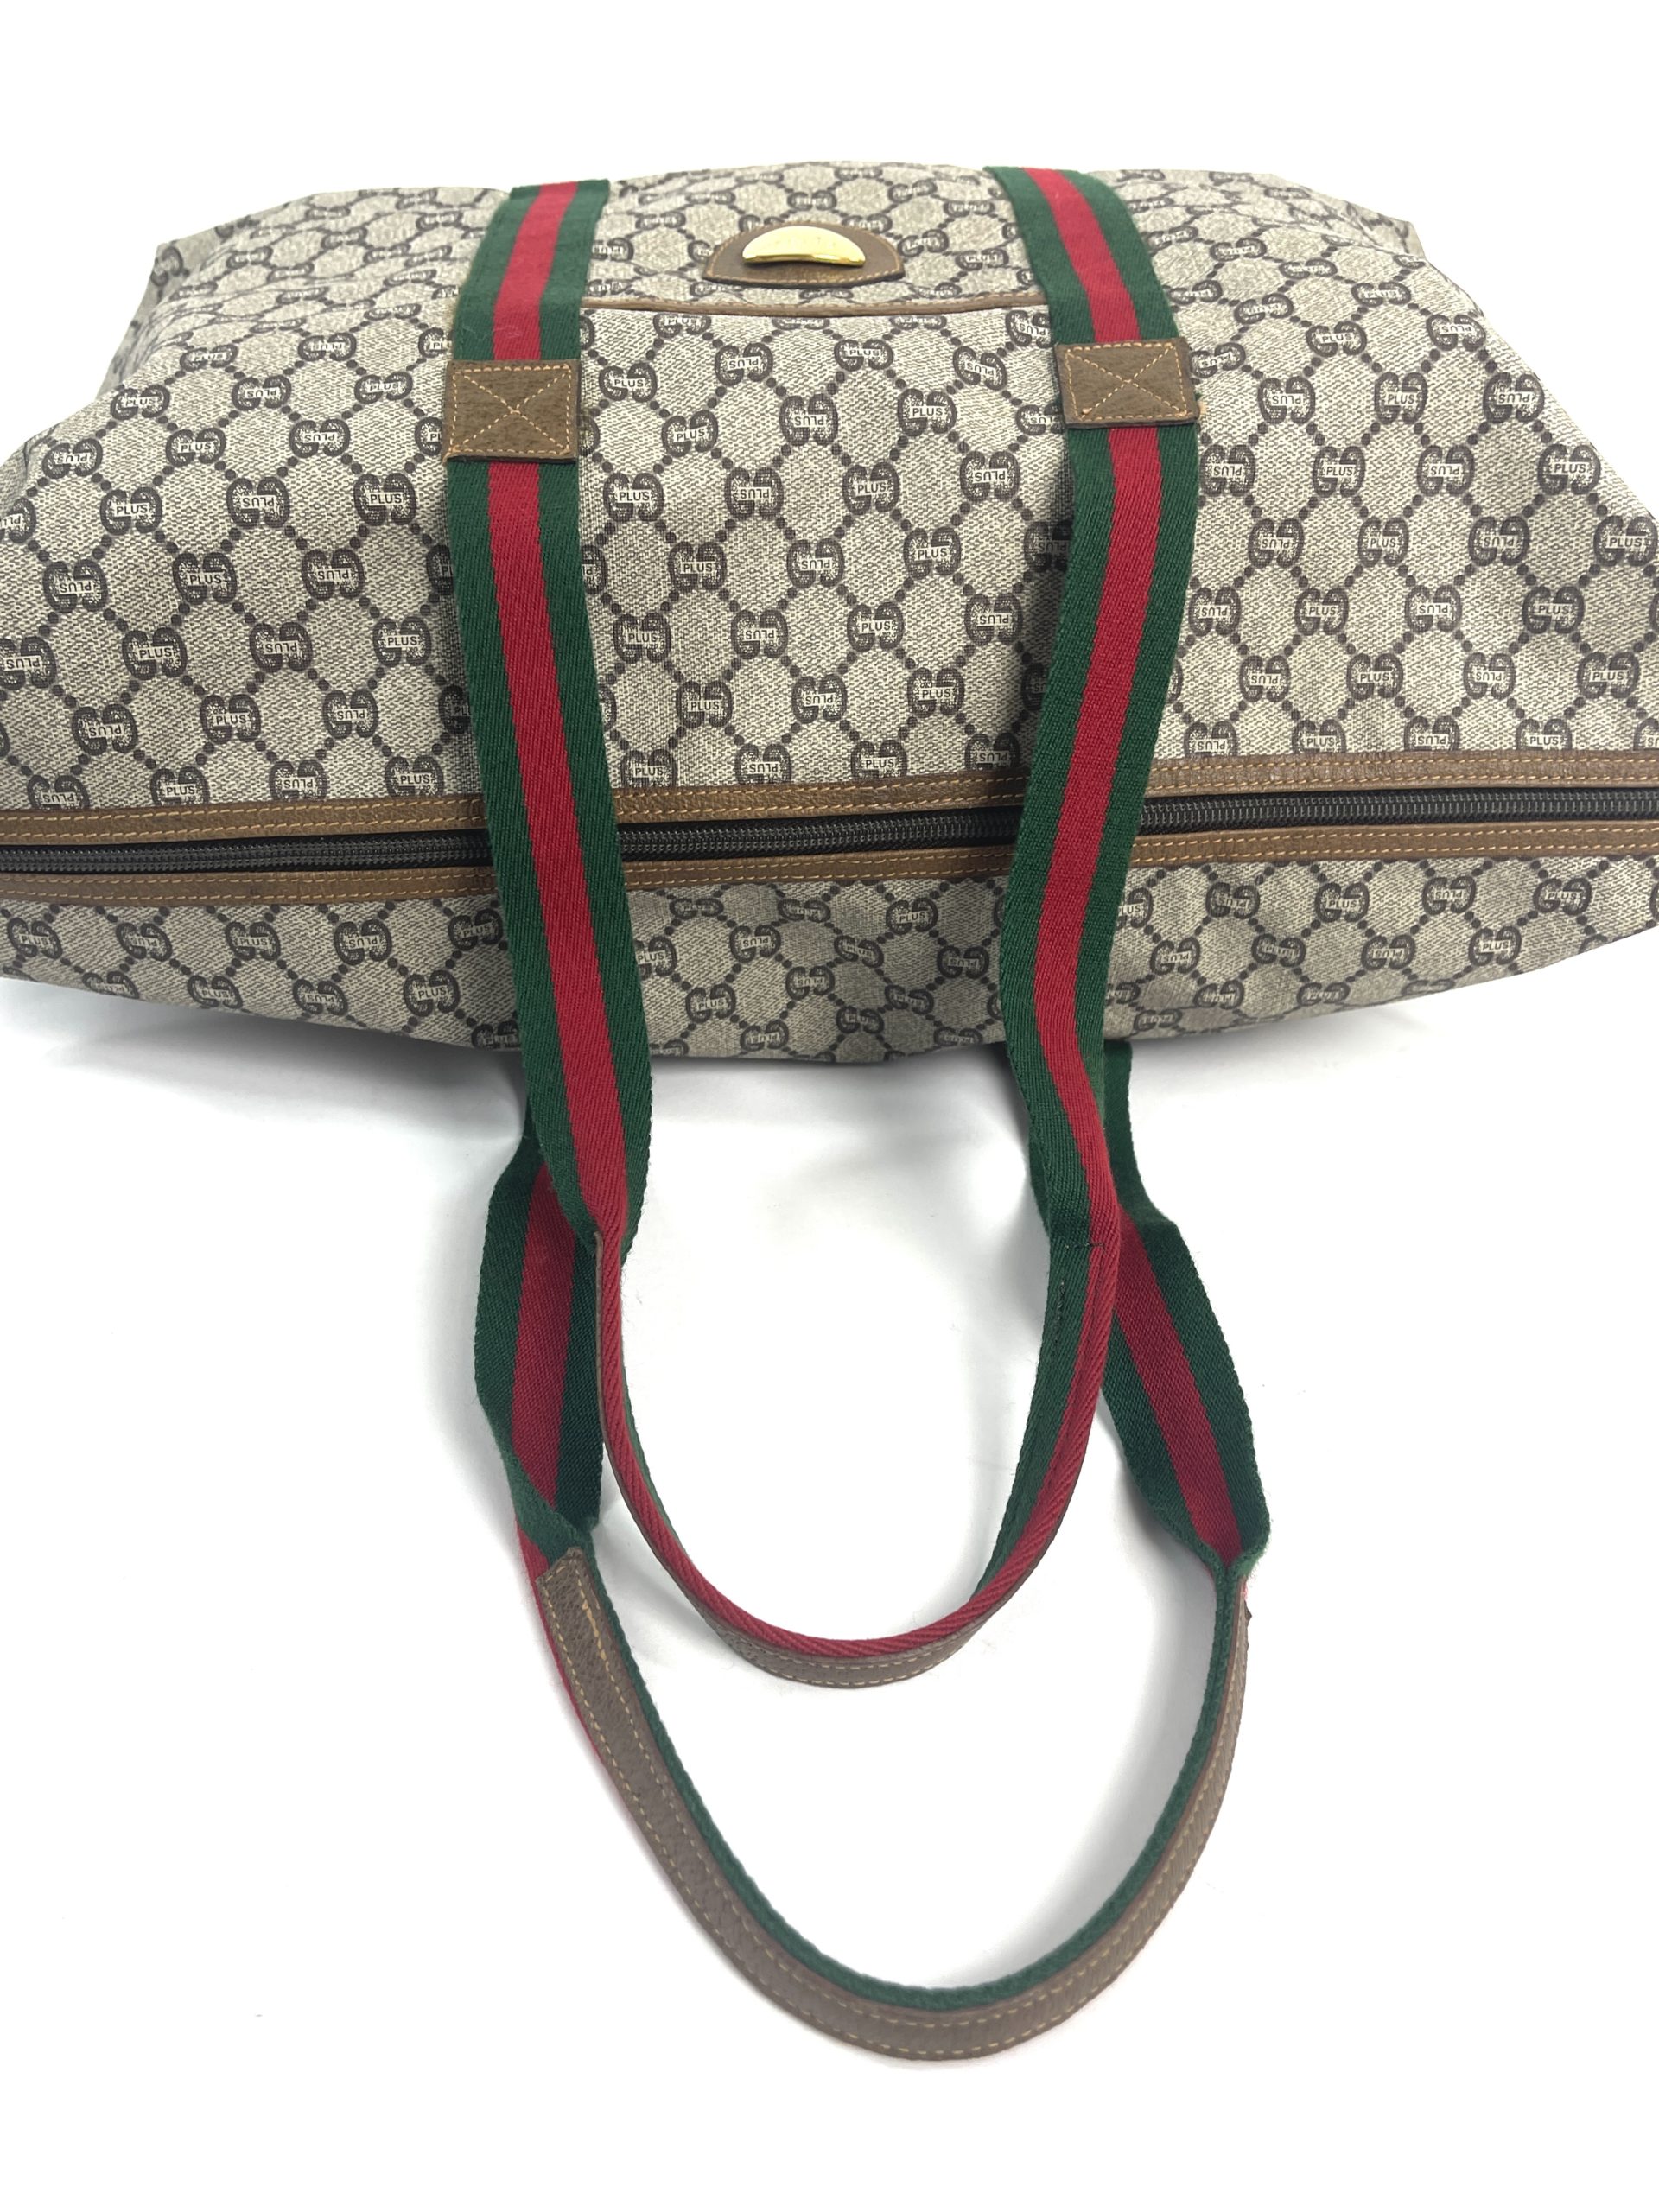 Vintage Gucci Canvas Hand Bag